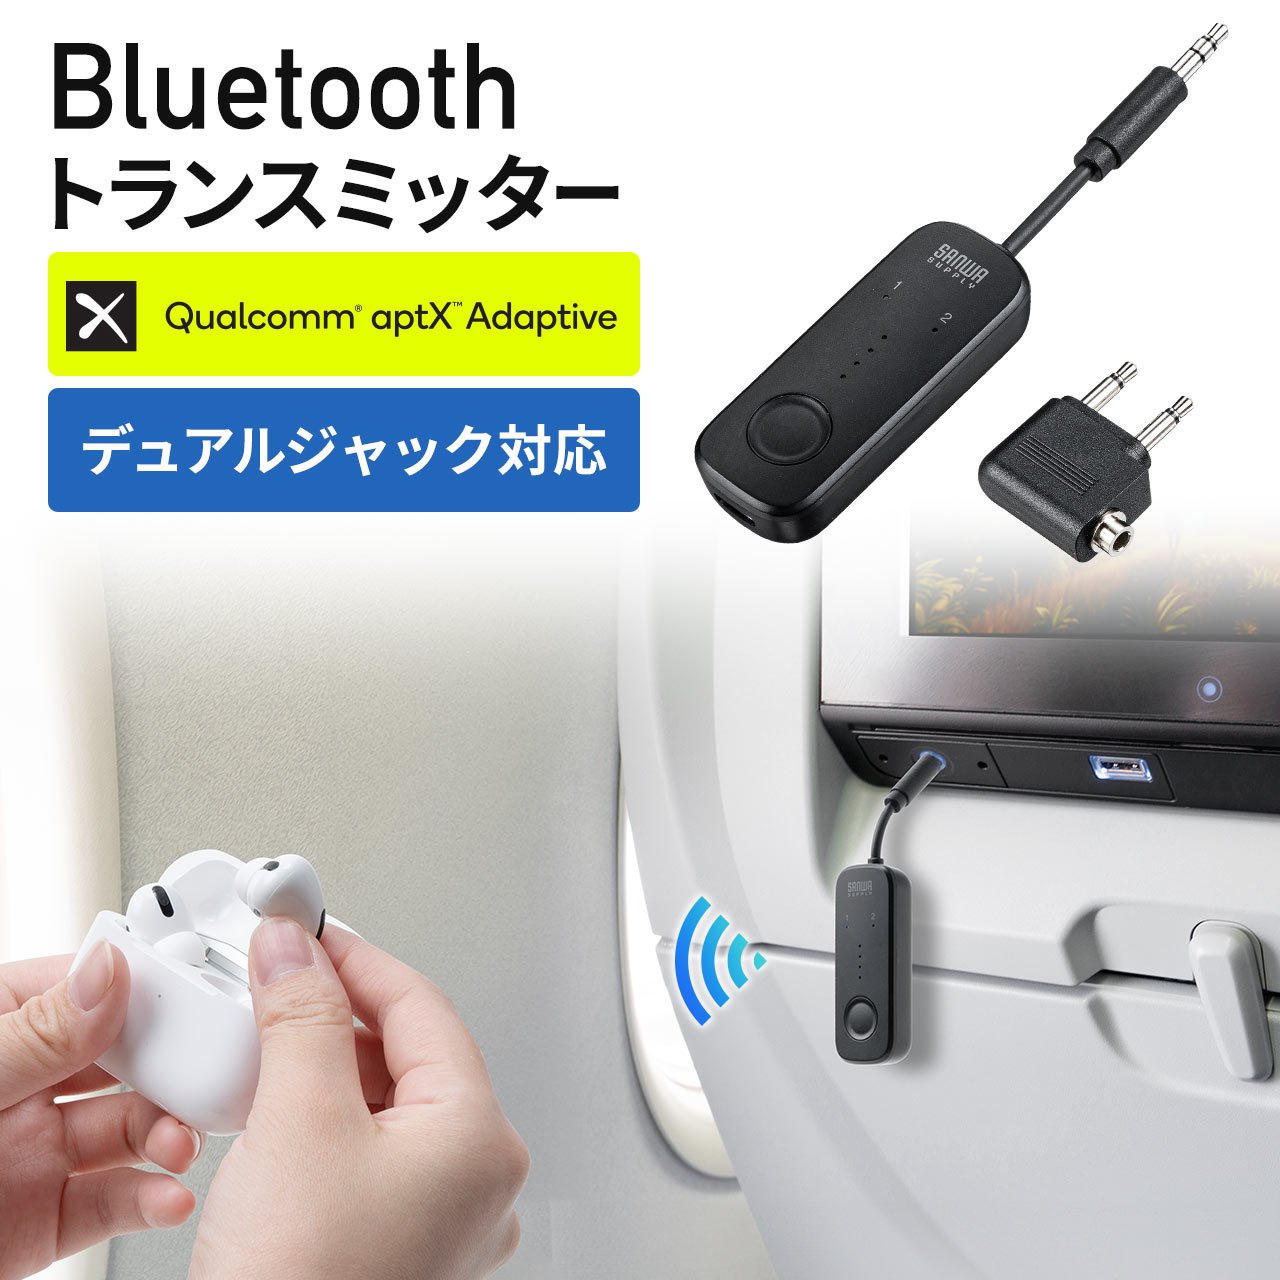 Bluetooth トランスミッター 送信機 レシーバー ブルートゥース テレビ バッテリー内蔵 2台同時接続 高音質 低遅延 オーディオトランスミッター 400-BTAD013